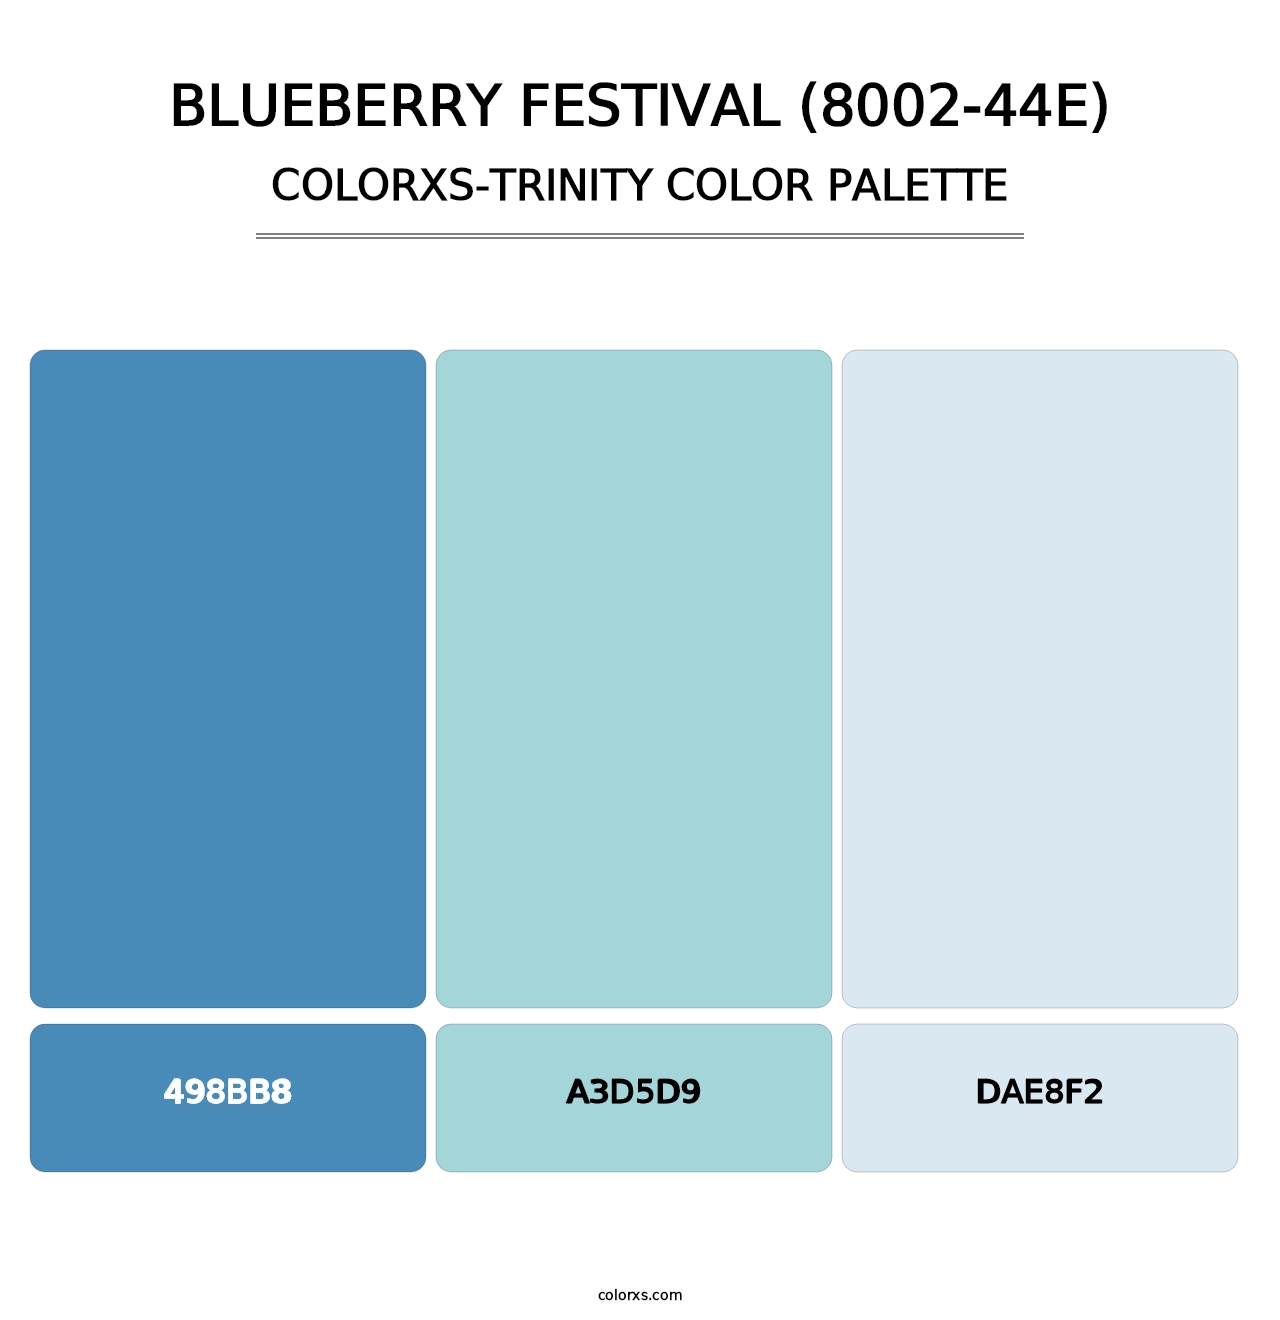 Blueberry Festival (8002-44E) - Colorxs Trinity Palette